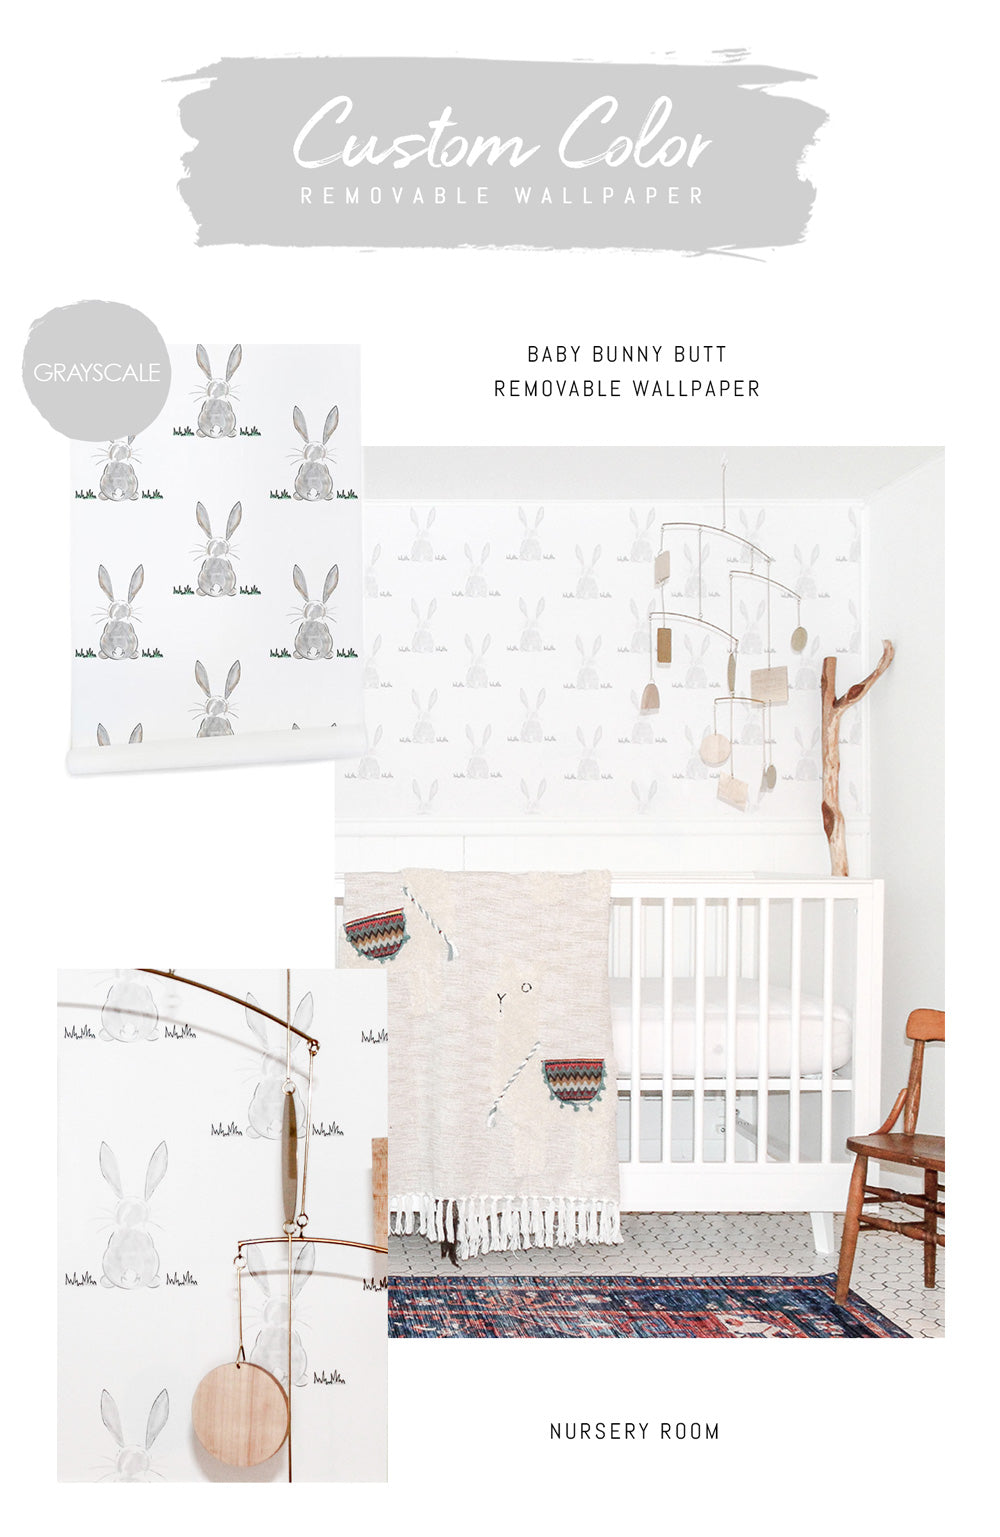 Greyscale bunny butt removable wallpaper for a boho nursery